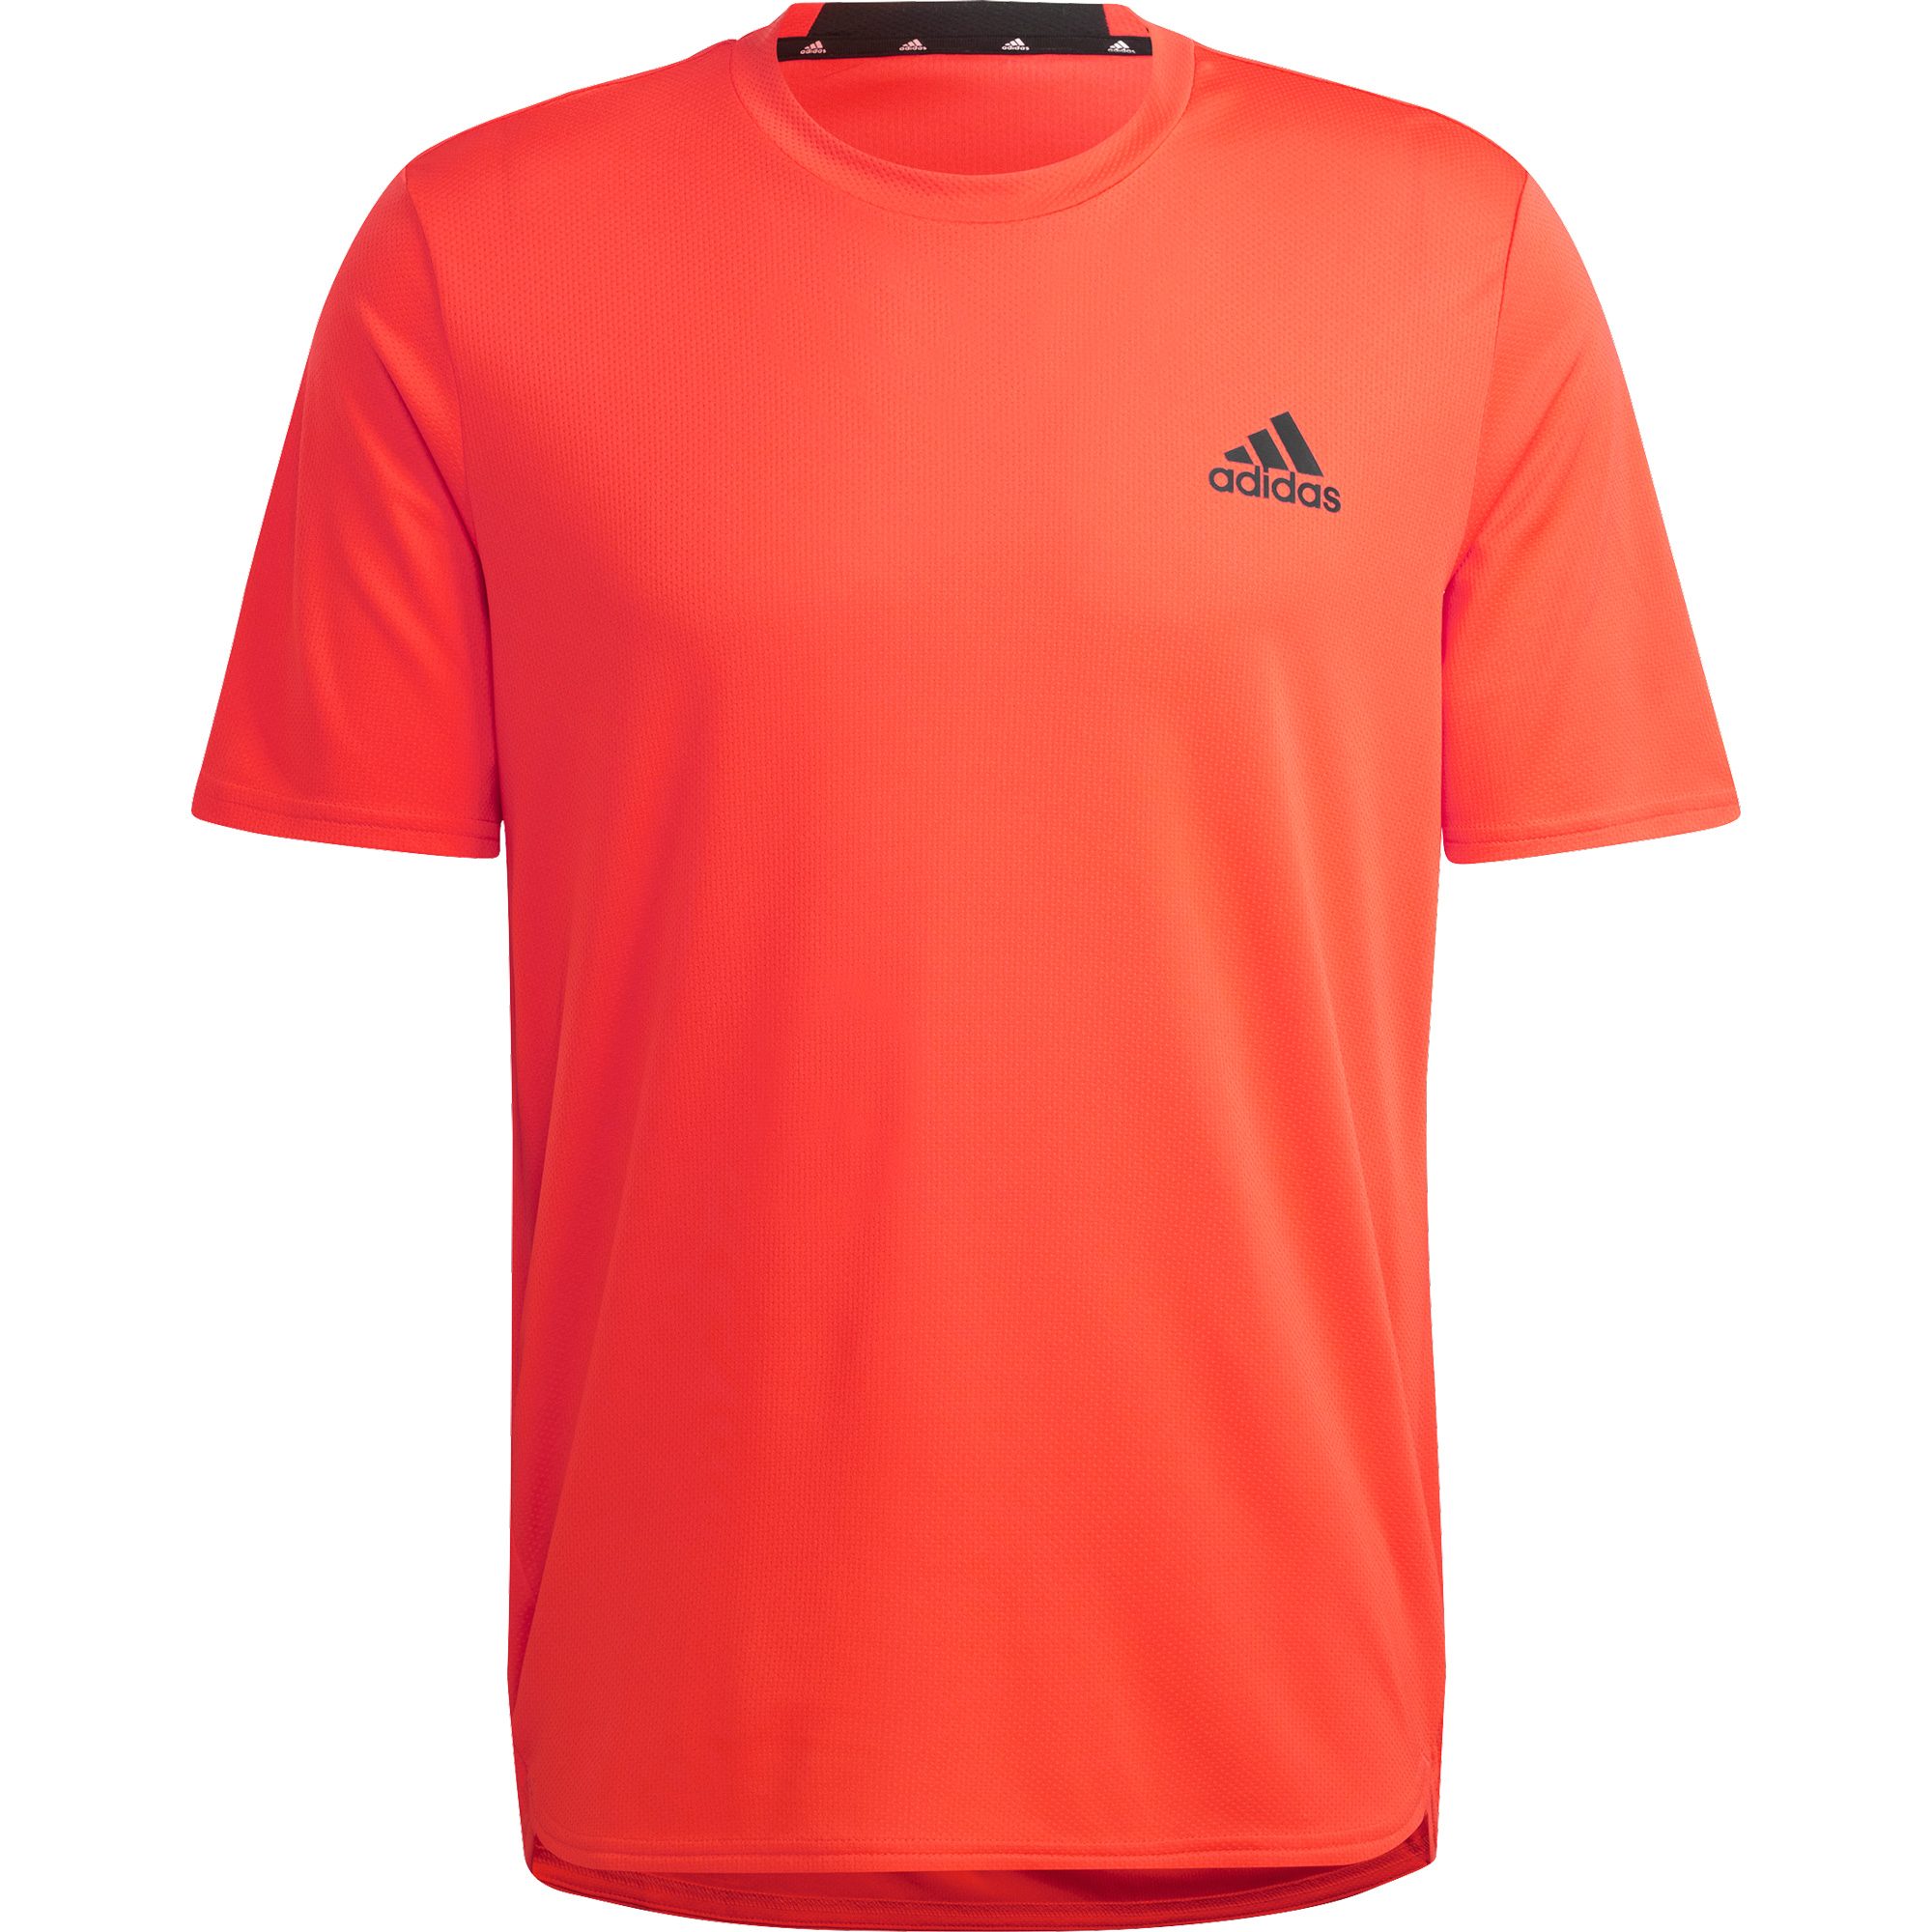 Designed T-Shirt Movement Sport adidas Herren - for kaufen hellrot Aeroready Bittl im Shop